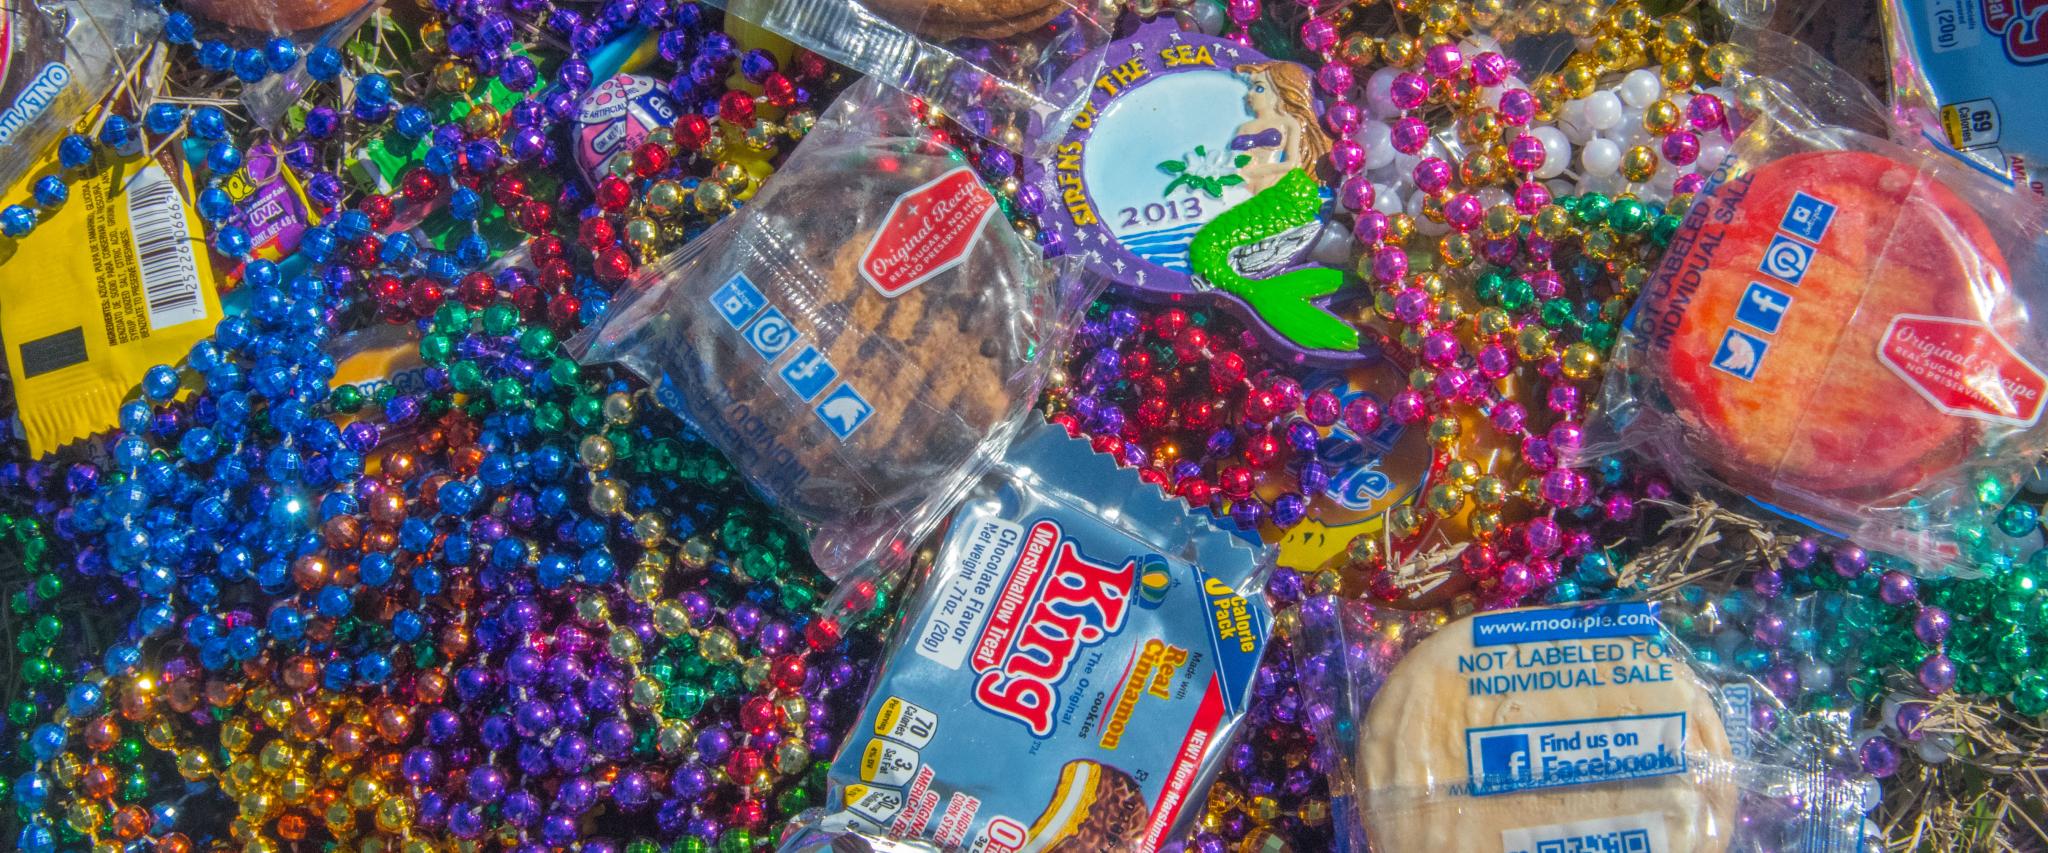 Mardi Gras beads and moon pies